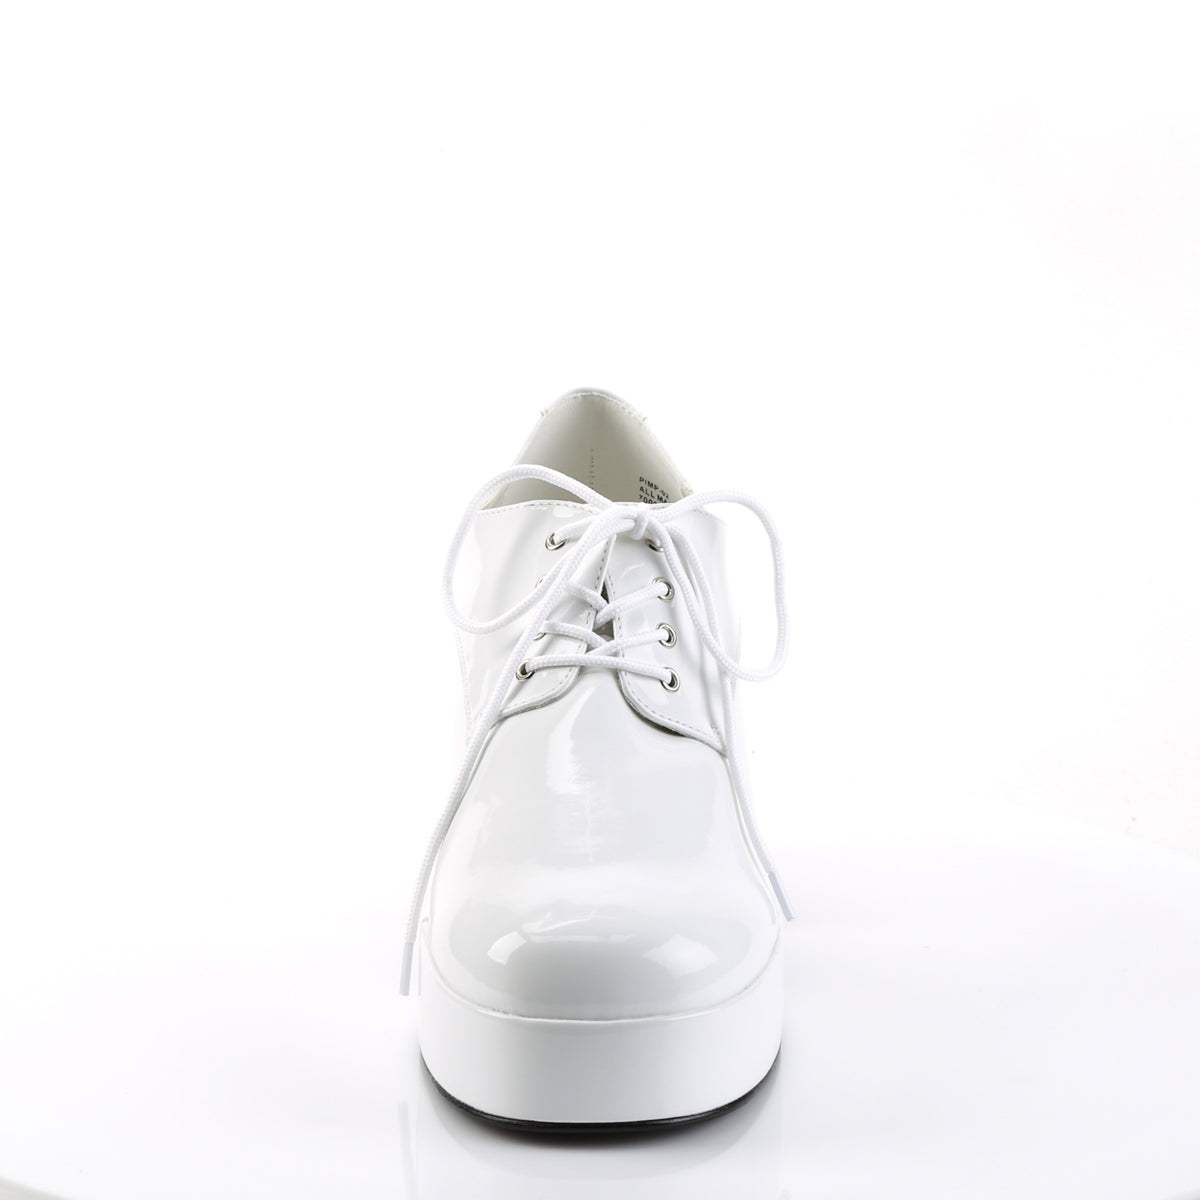 Pimp Platform Shoes White